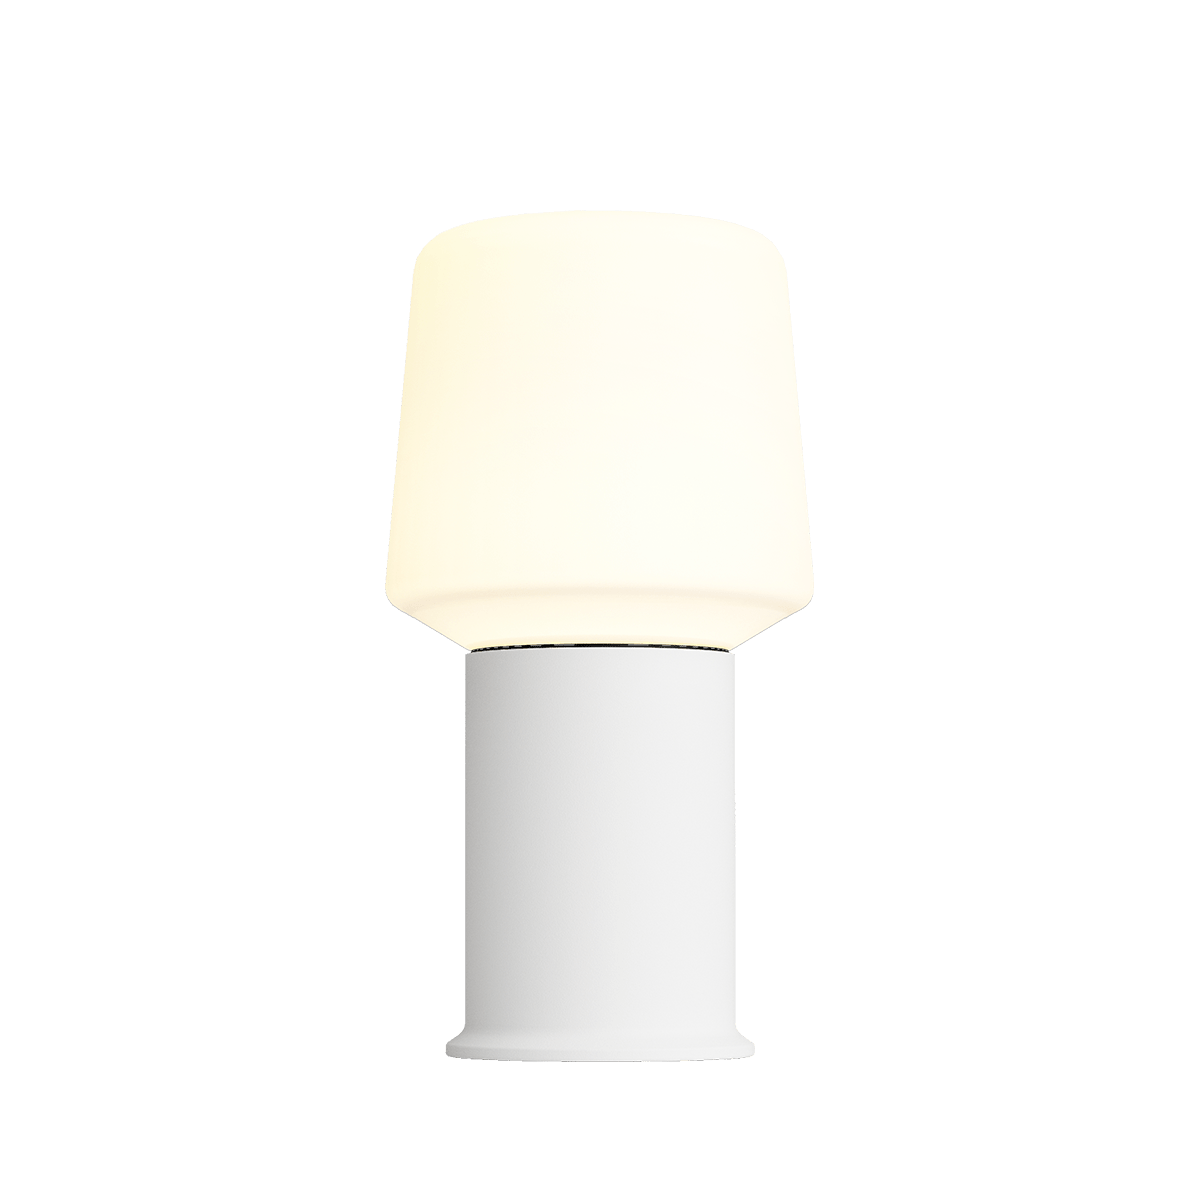 variant_600223% | Ambience - Lamp Intelligent + London base - White 8 | SACKit